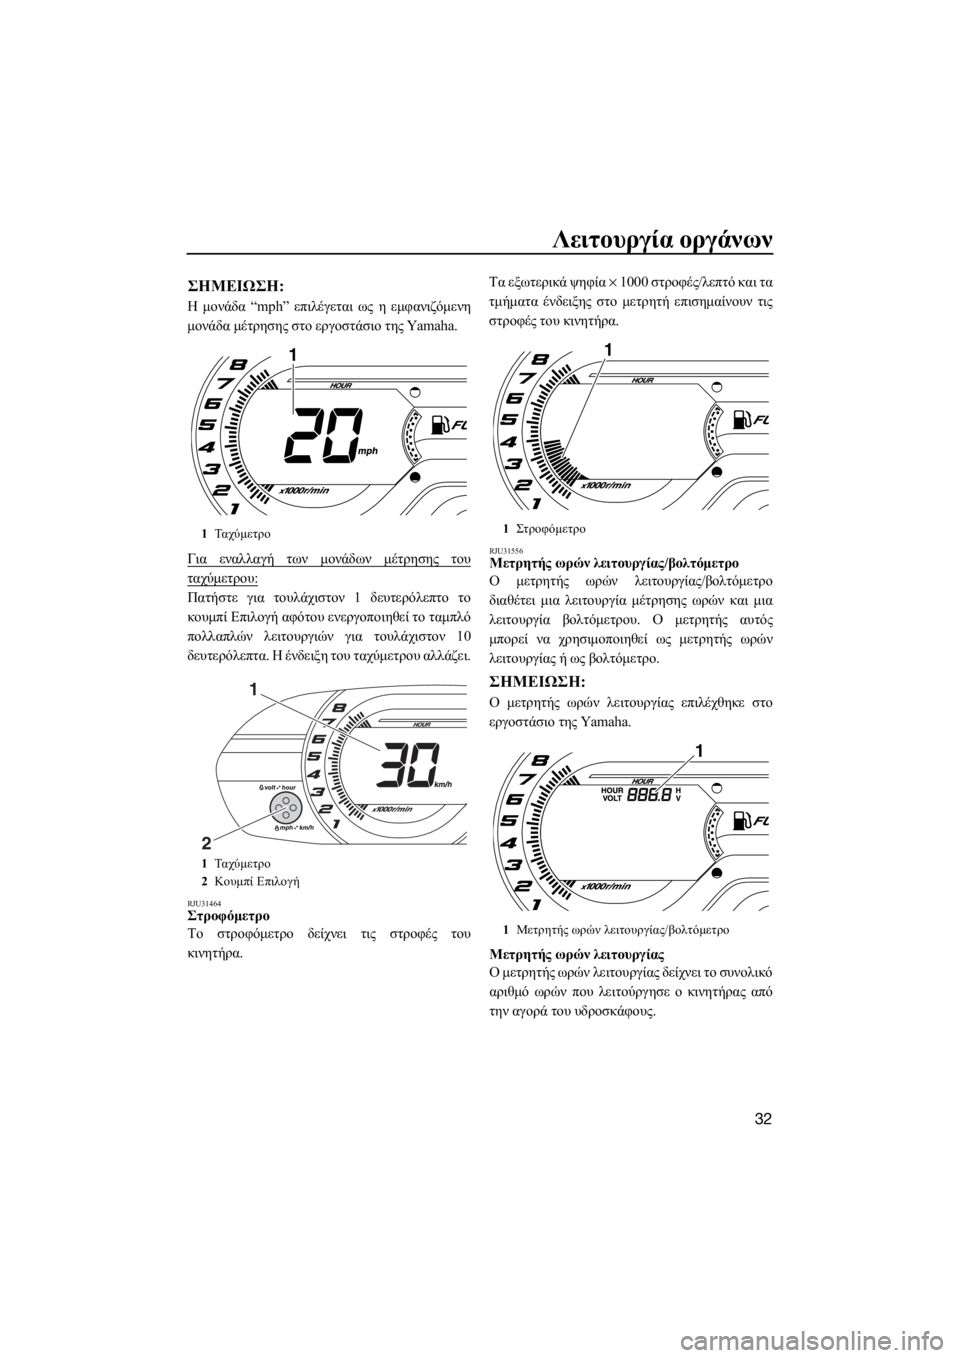 YAMAHA V1 SPORT 2015  ΟΔΗΓΌΣ ΧΡΉΣΗΣ (in Greek) Λειτουργία οργάνων
32
ΣΗMΕΙΩΣΗ:
Η μονάδα “mph” επιλέγεται ως η εμφανιζόμενη
μονάδα μέτρησης στο εργοστάσιο τη�